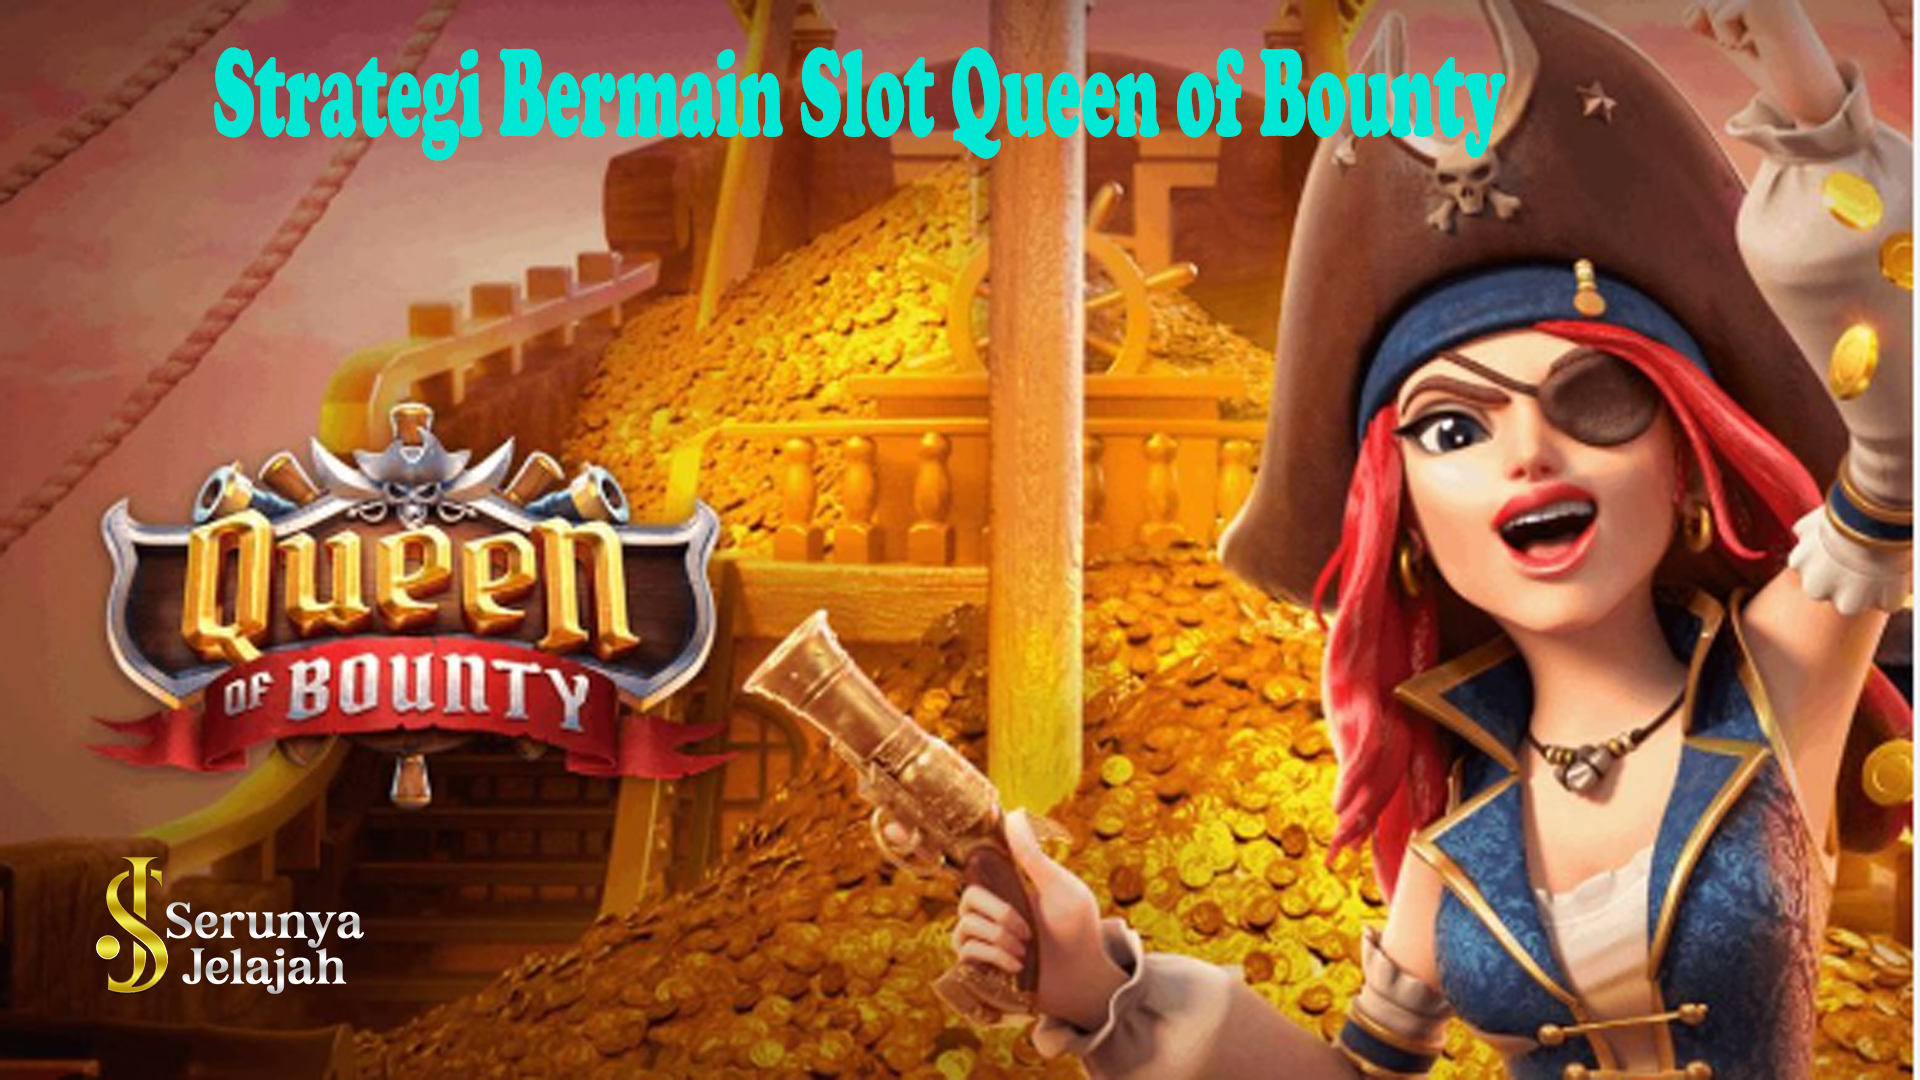 Strategi Bermain Slot Queen of Bounty